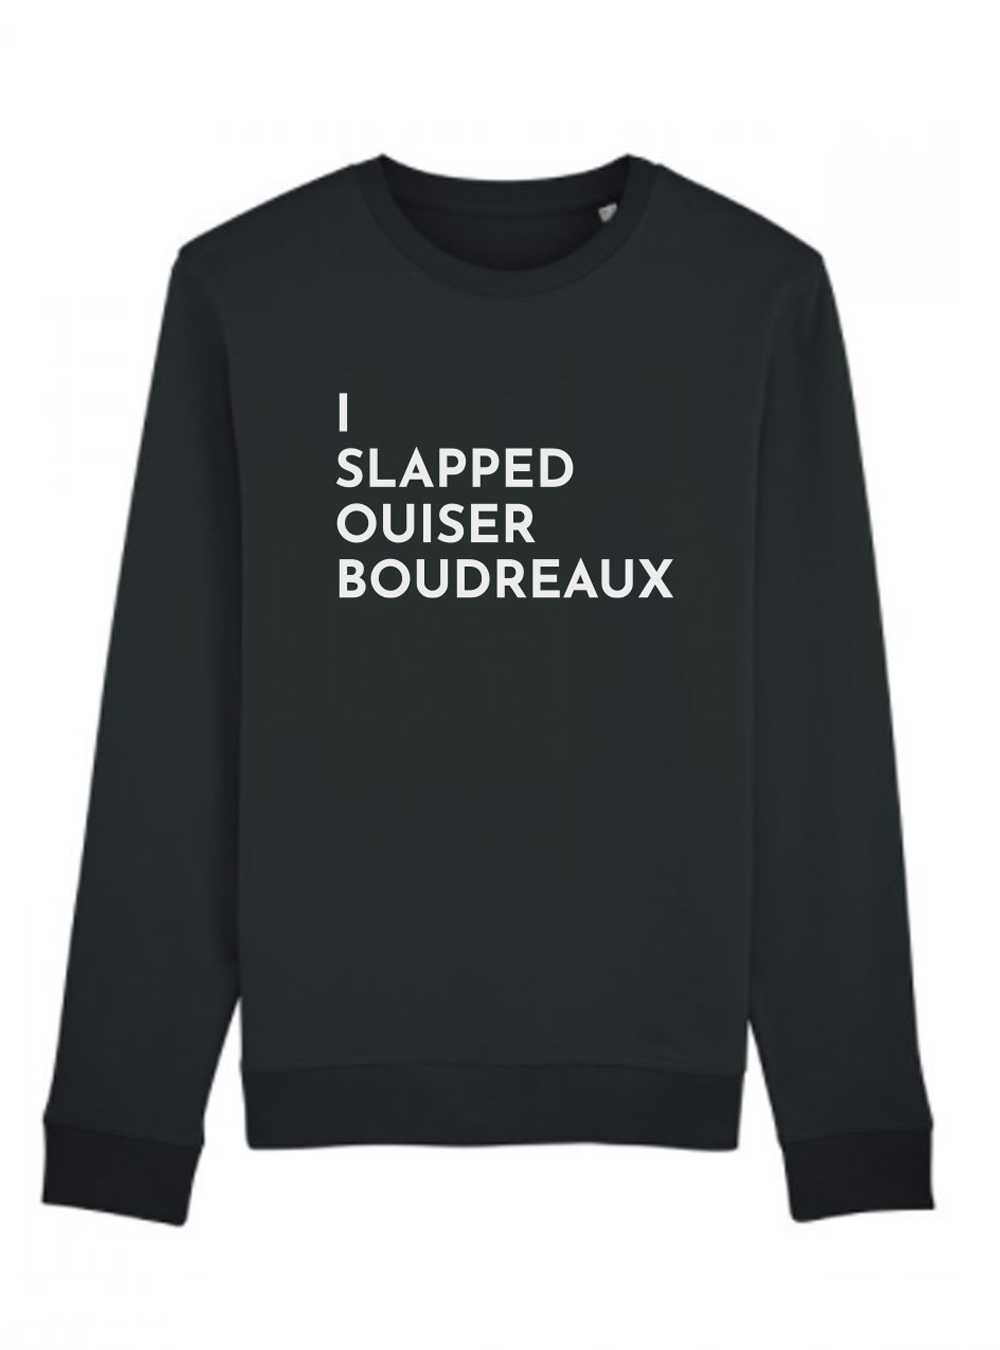 outset Boudreaux sweater